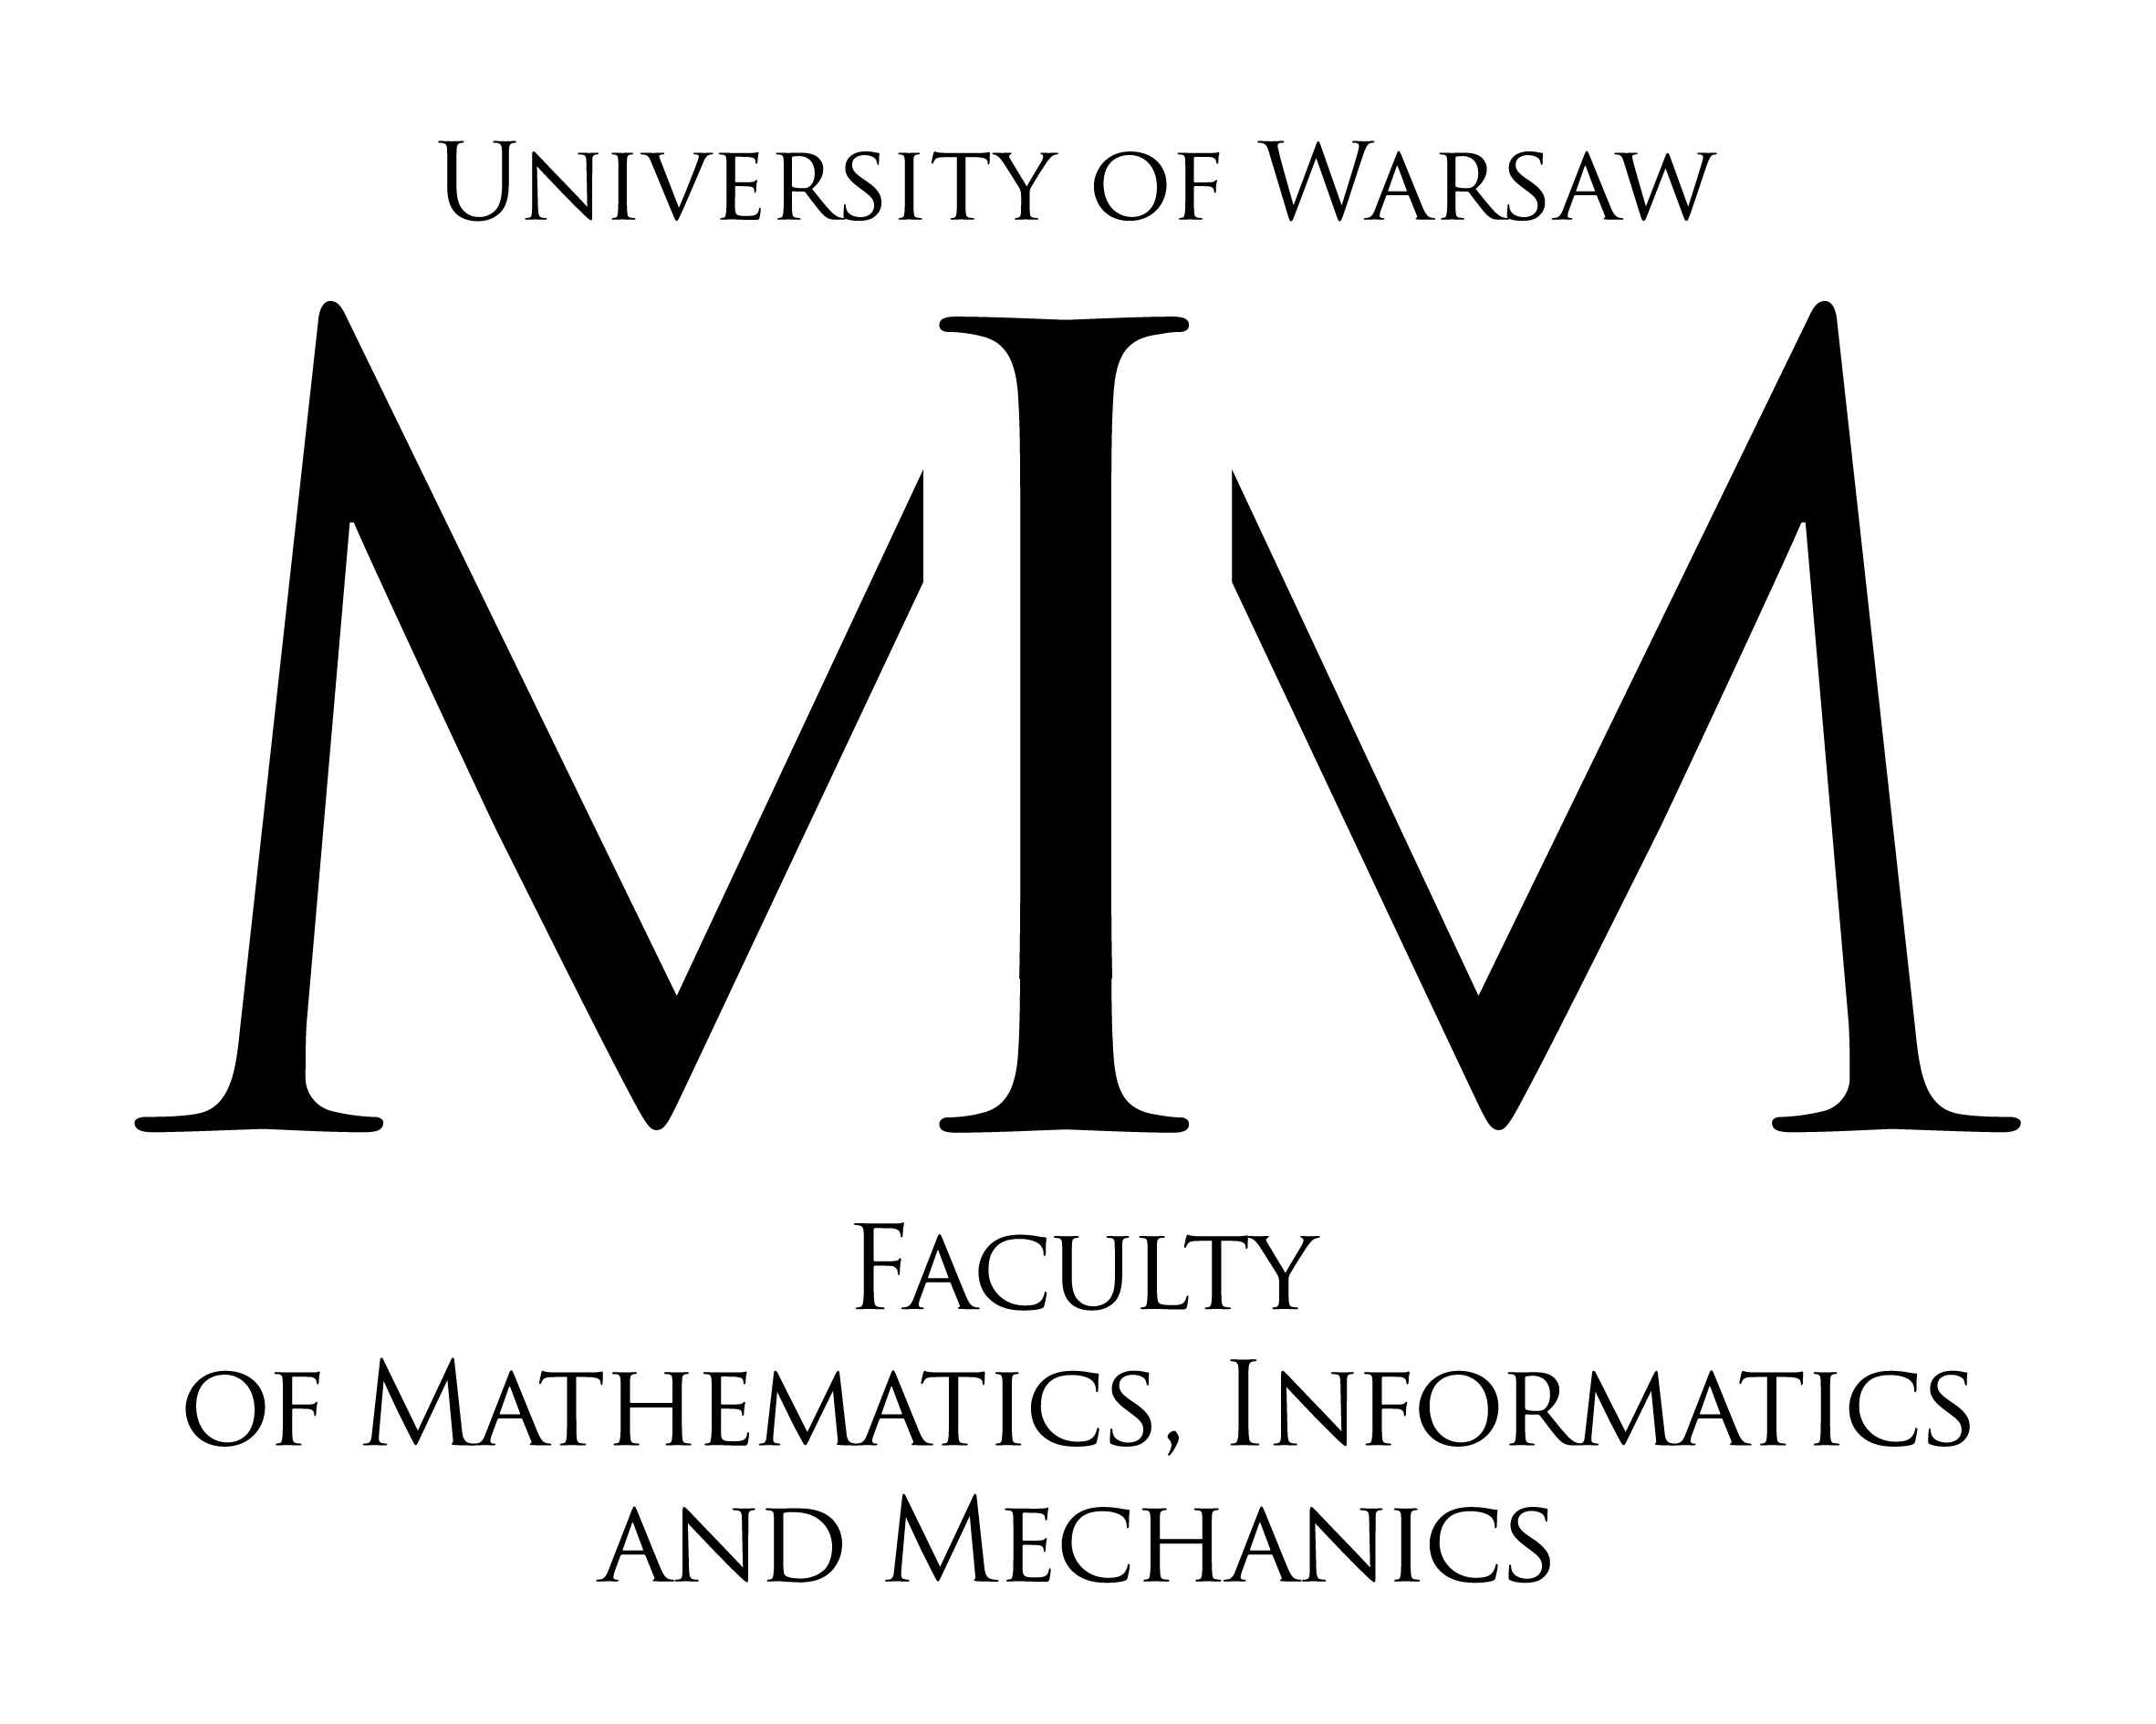 University of Warsaw, Faculty of Mathematics, Informatics and Mechanics